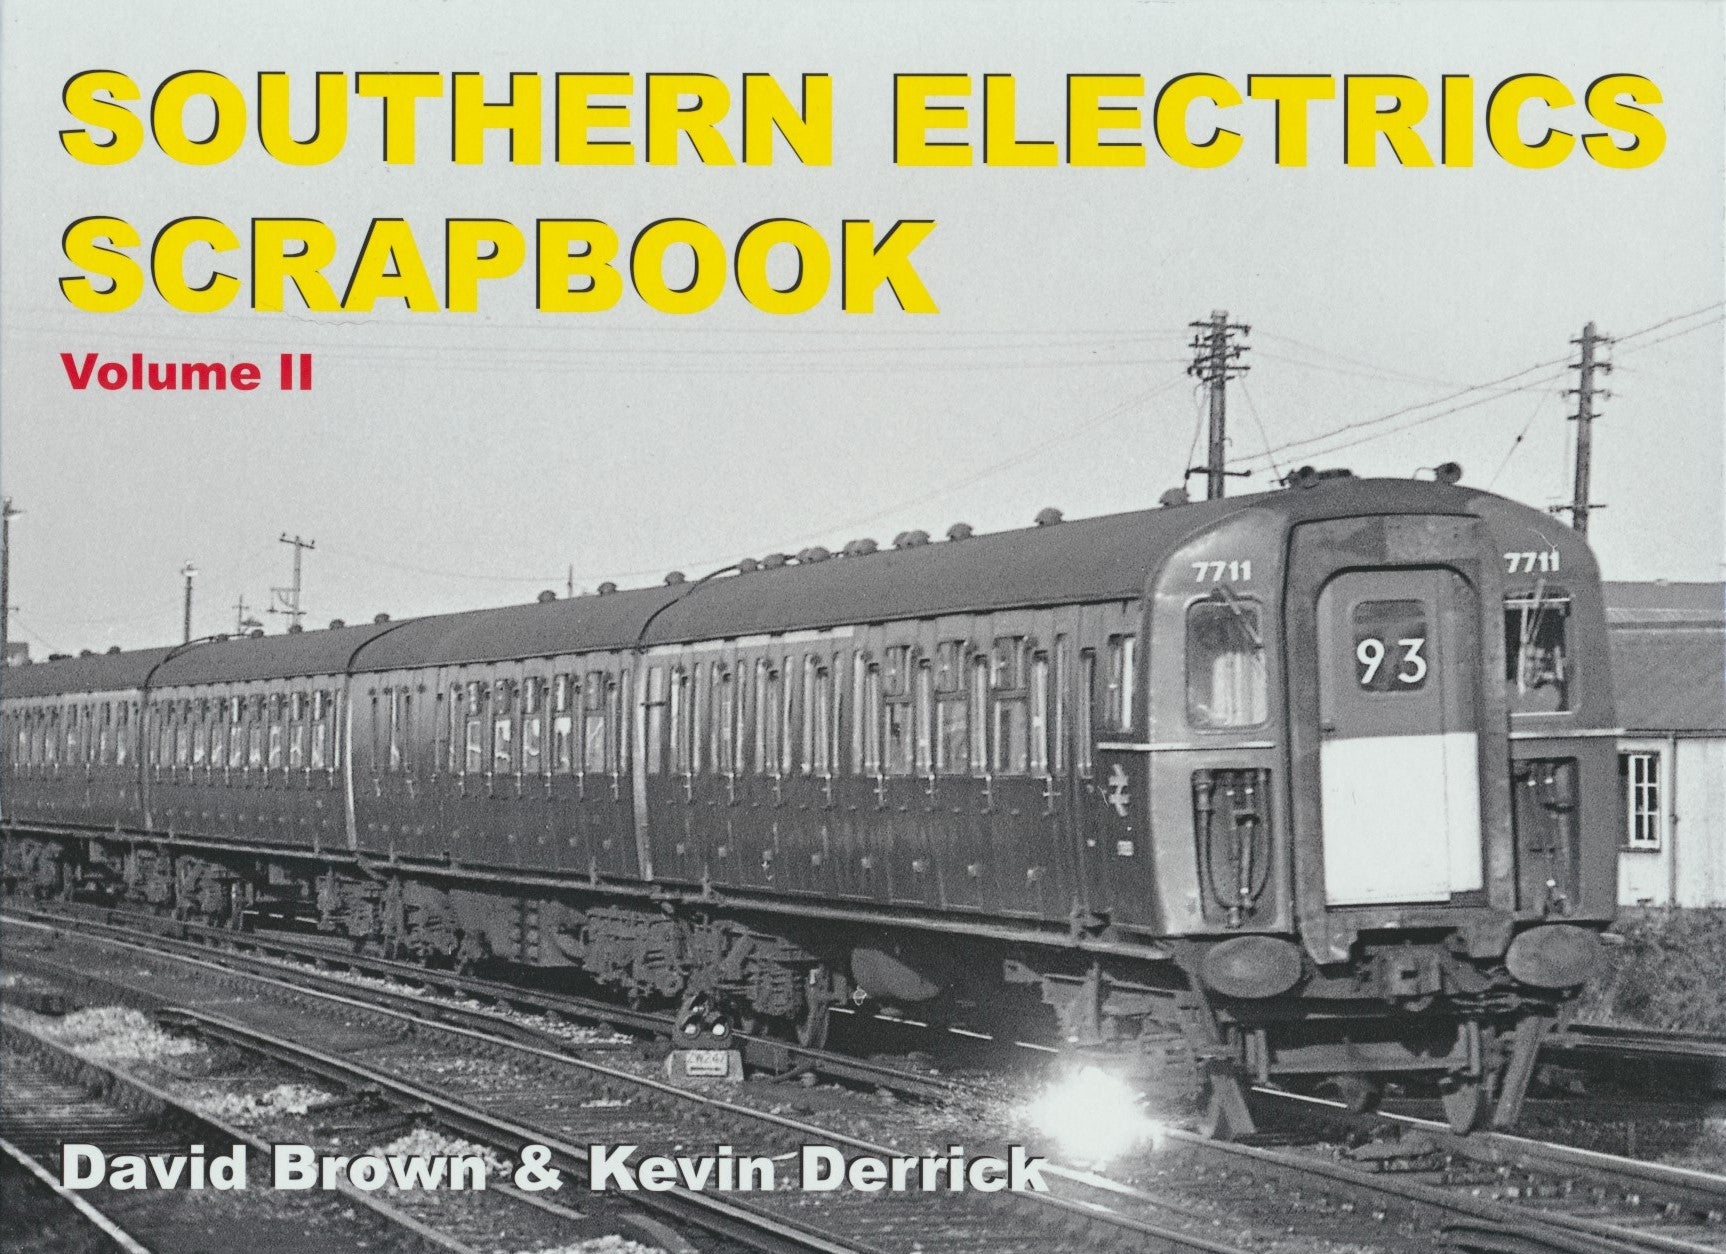 Southern Electric Scrapbook Volume II